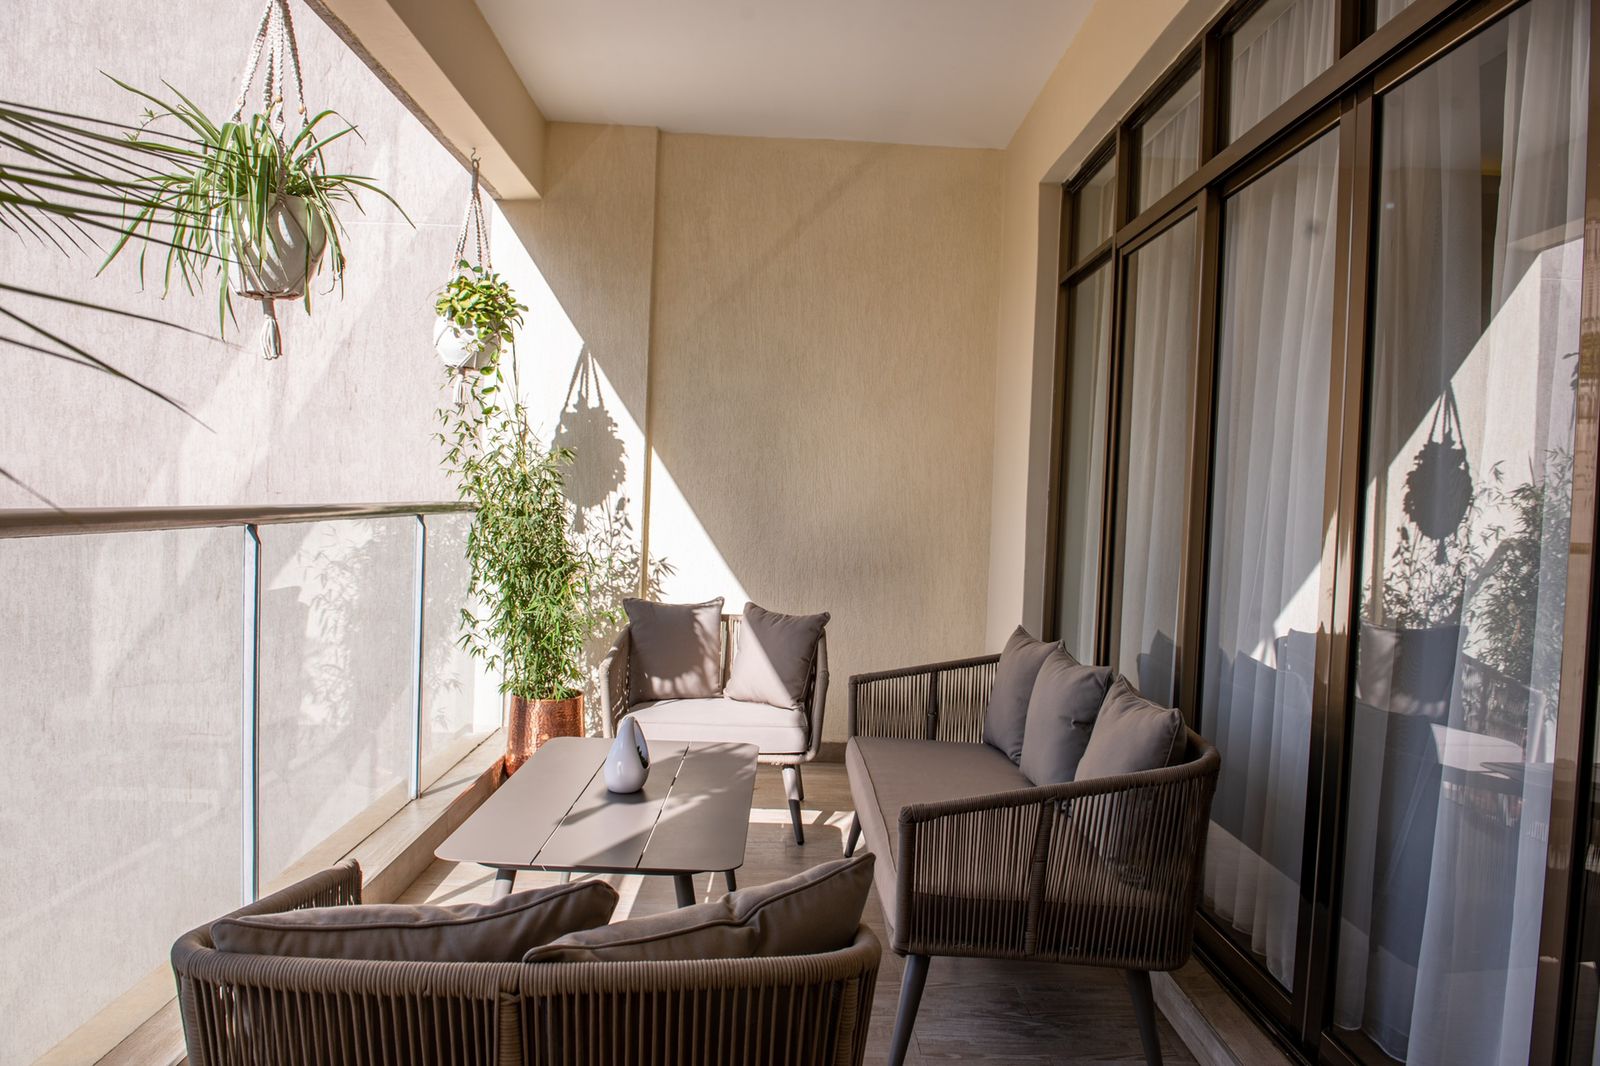 An Elegant Fully Furnished 2 Bedroom Apartments For Rent In Kileleshwa at Ksh180k:Month9